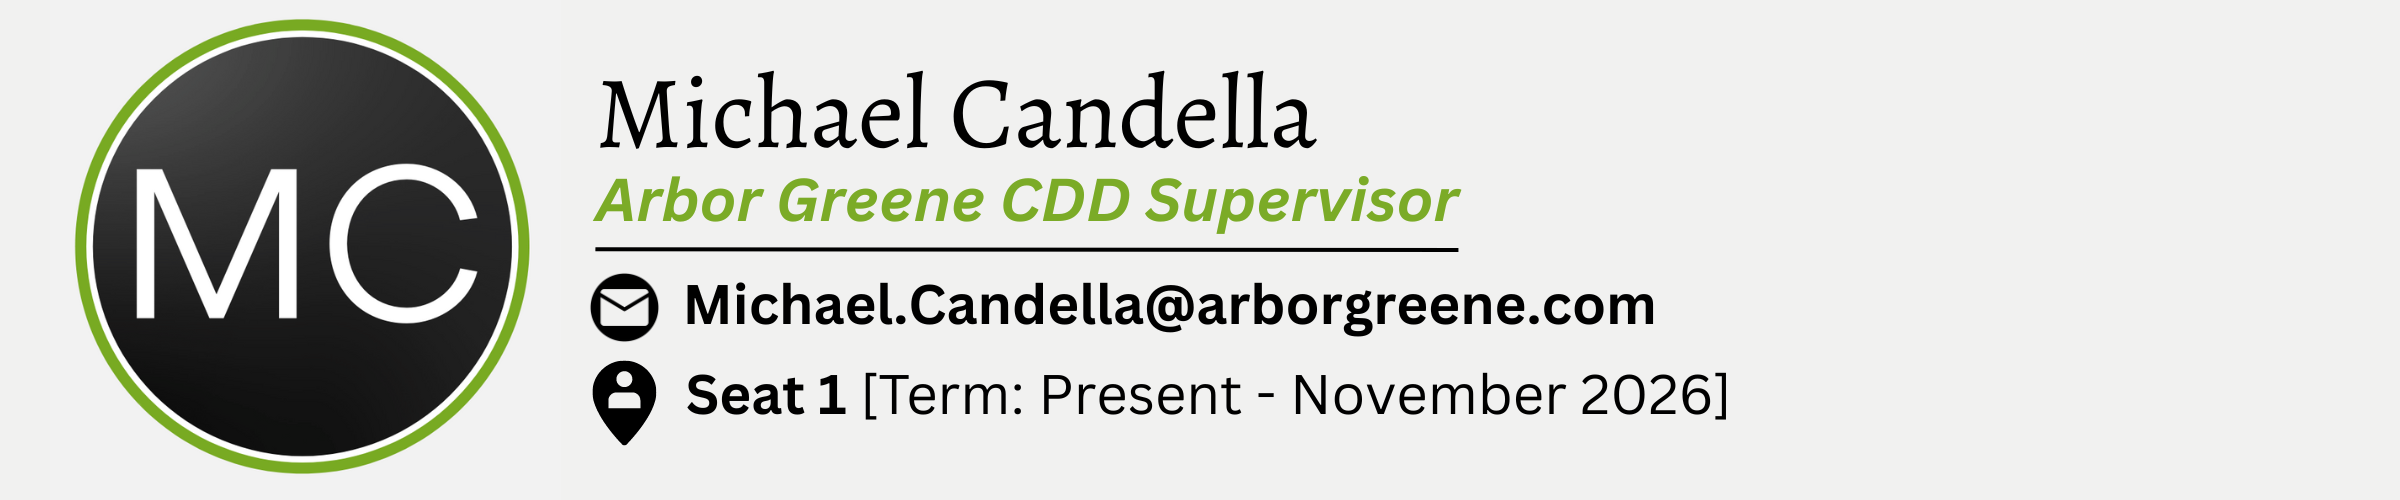 Michael Candella. Arbor Greene CDD Supervisor. E-Mail is Michael.Candella@arborgreene.com. Seat #1. Term from Present to November 2026.